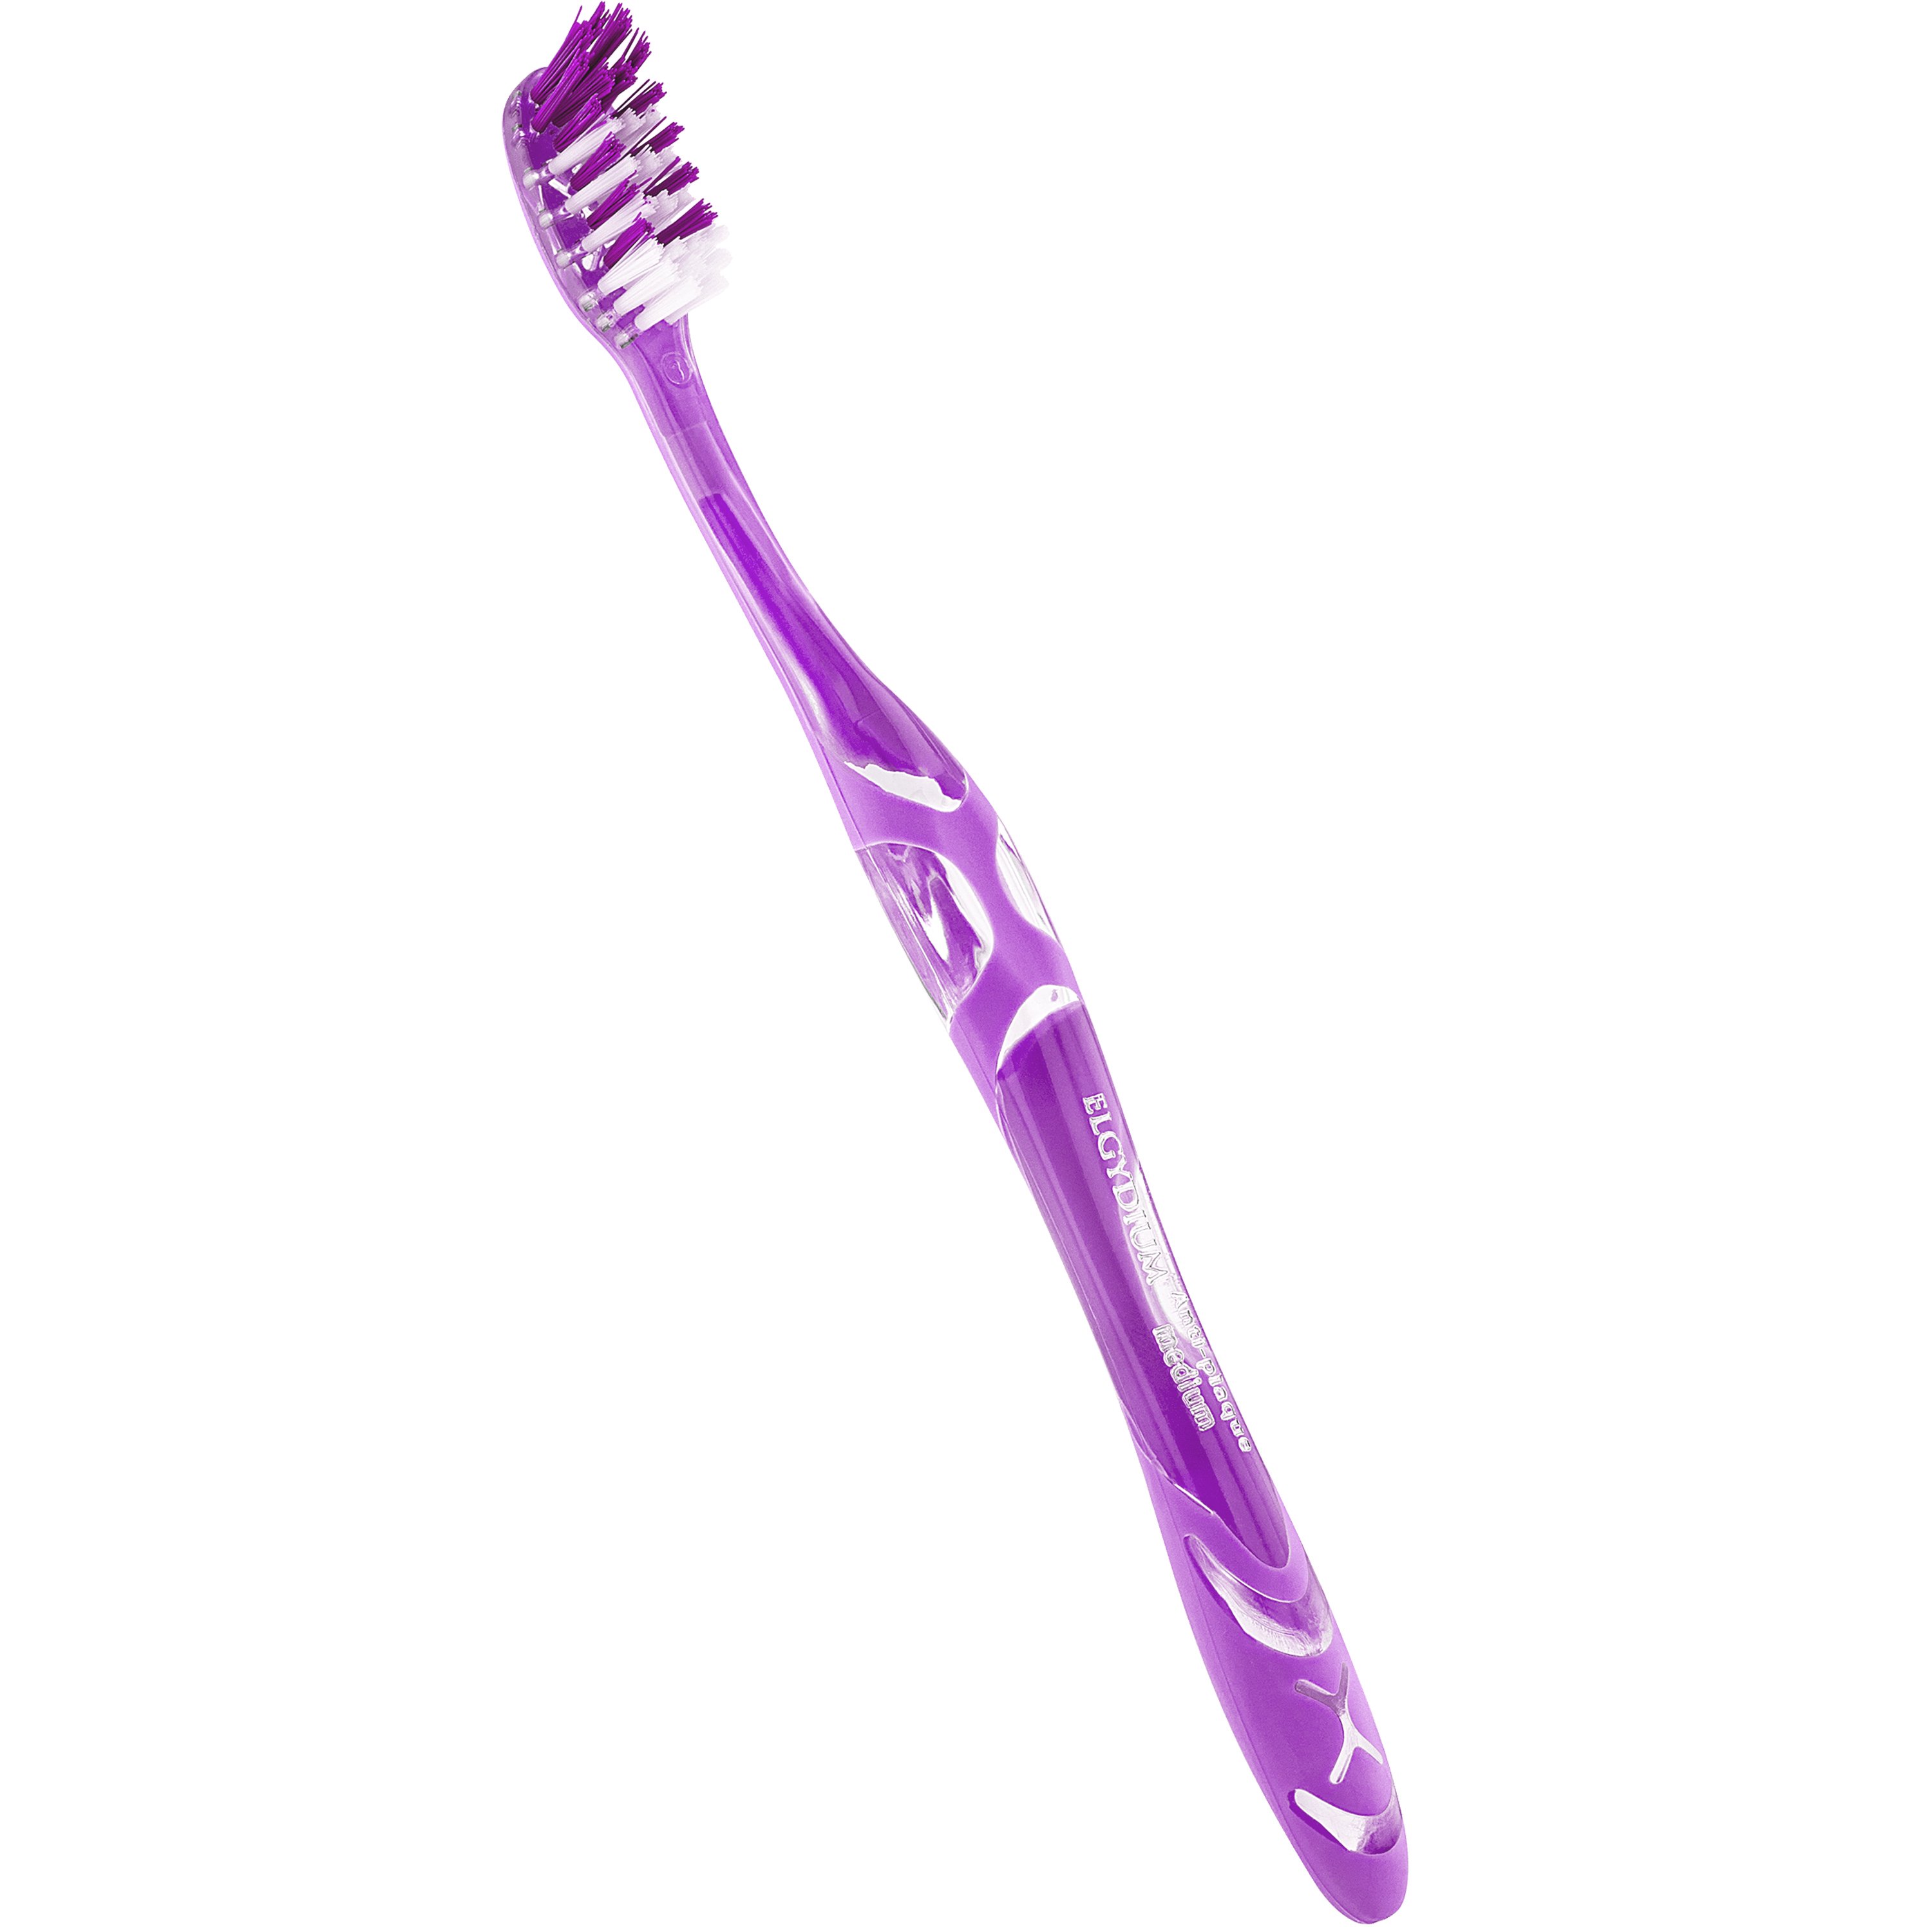 Elgydium Toothbrush Antiplaque Medium Μέτρια Οδοντόβουρτσα για Βαθύ Καθαρισμό & Απομάκρυνση Οδοντικής Πλάκας 1 Τεμάχιο – Μωβ